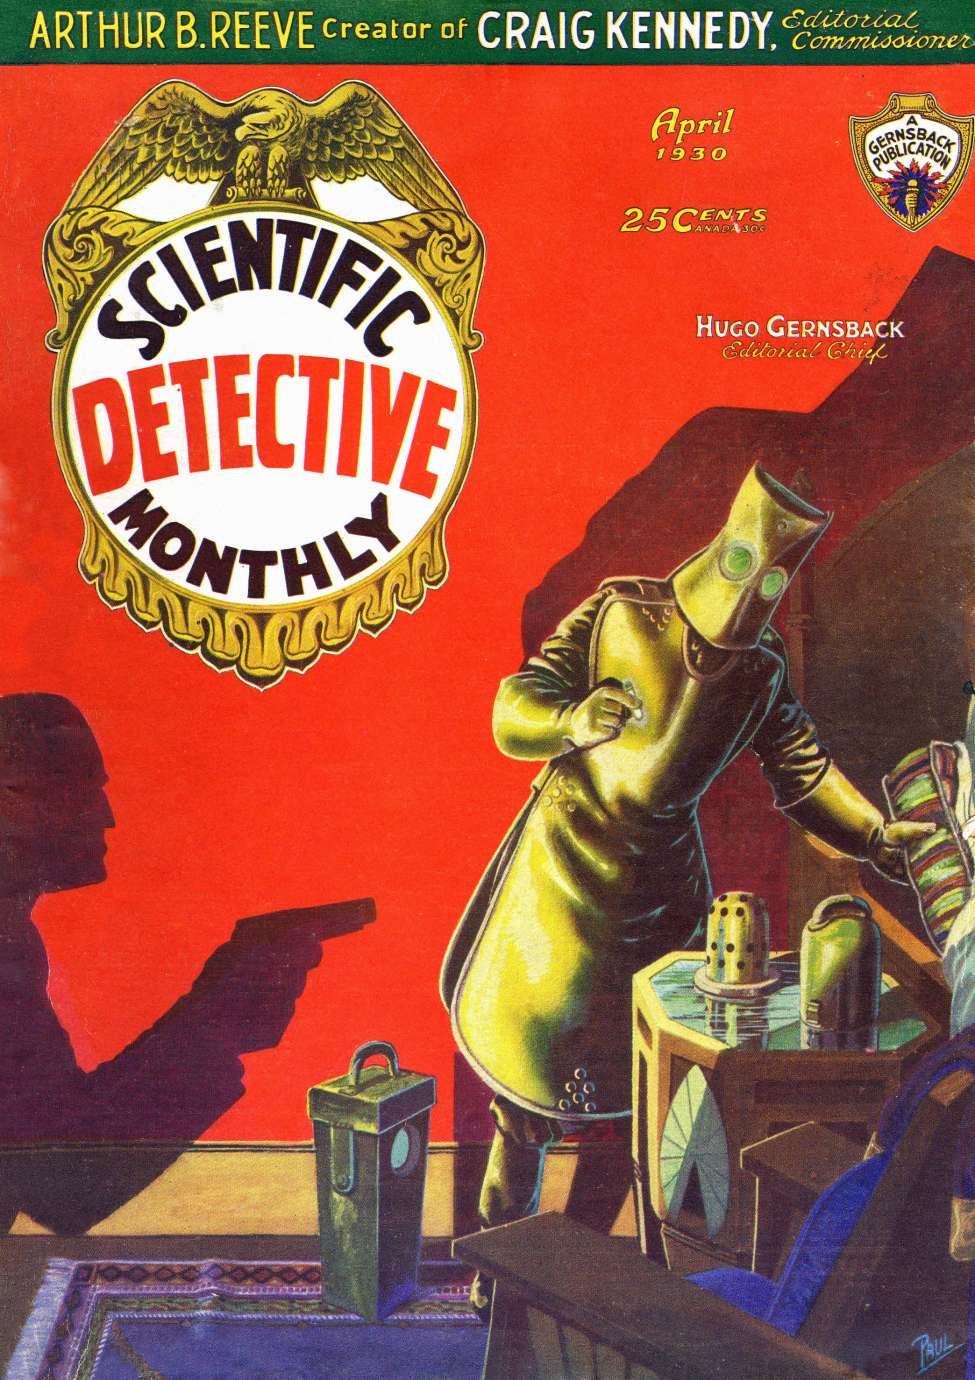 Book Cover For Scientific Detective Monthly v1 4 - Black Light - Henry Leverage